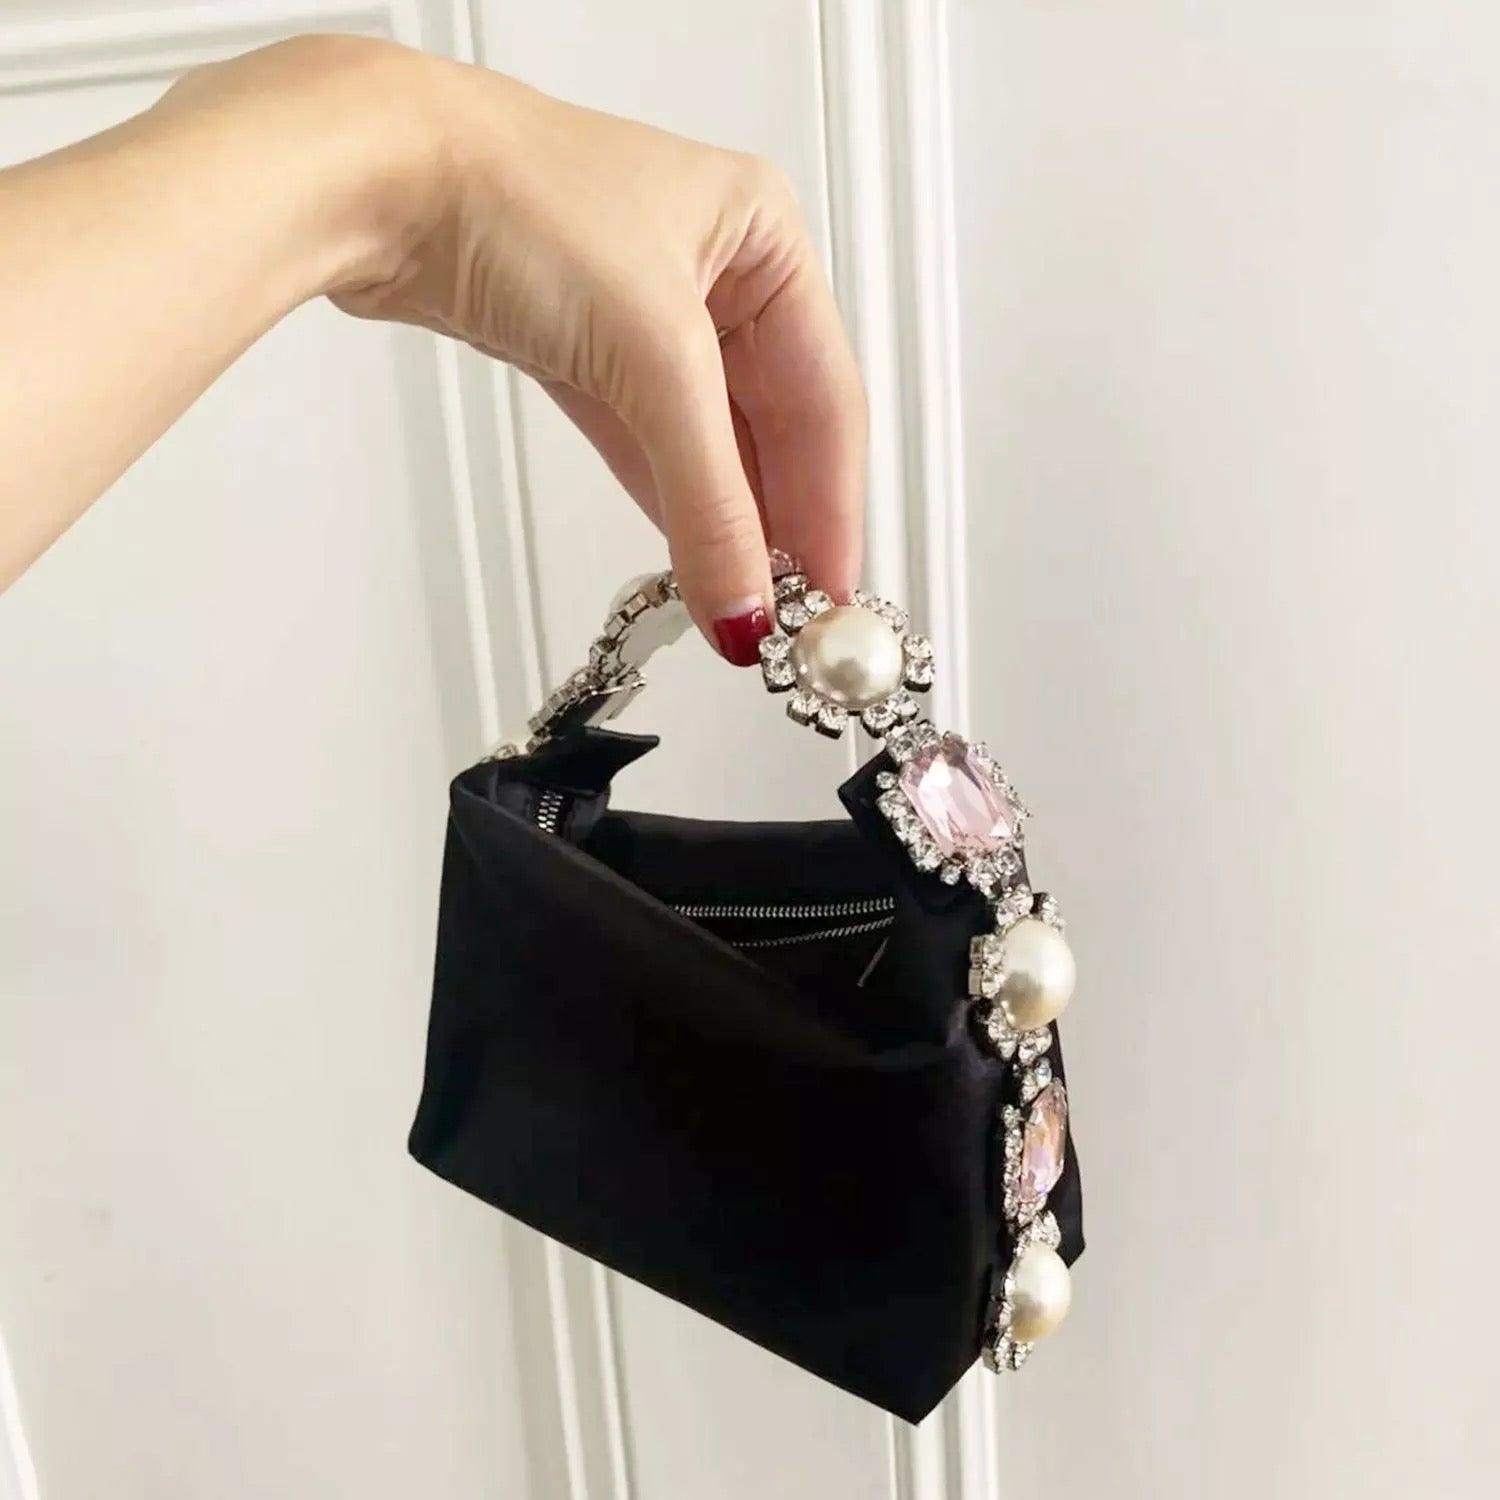 Jill Rhinestone handbag - Label Frenesi Fashion